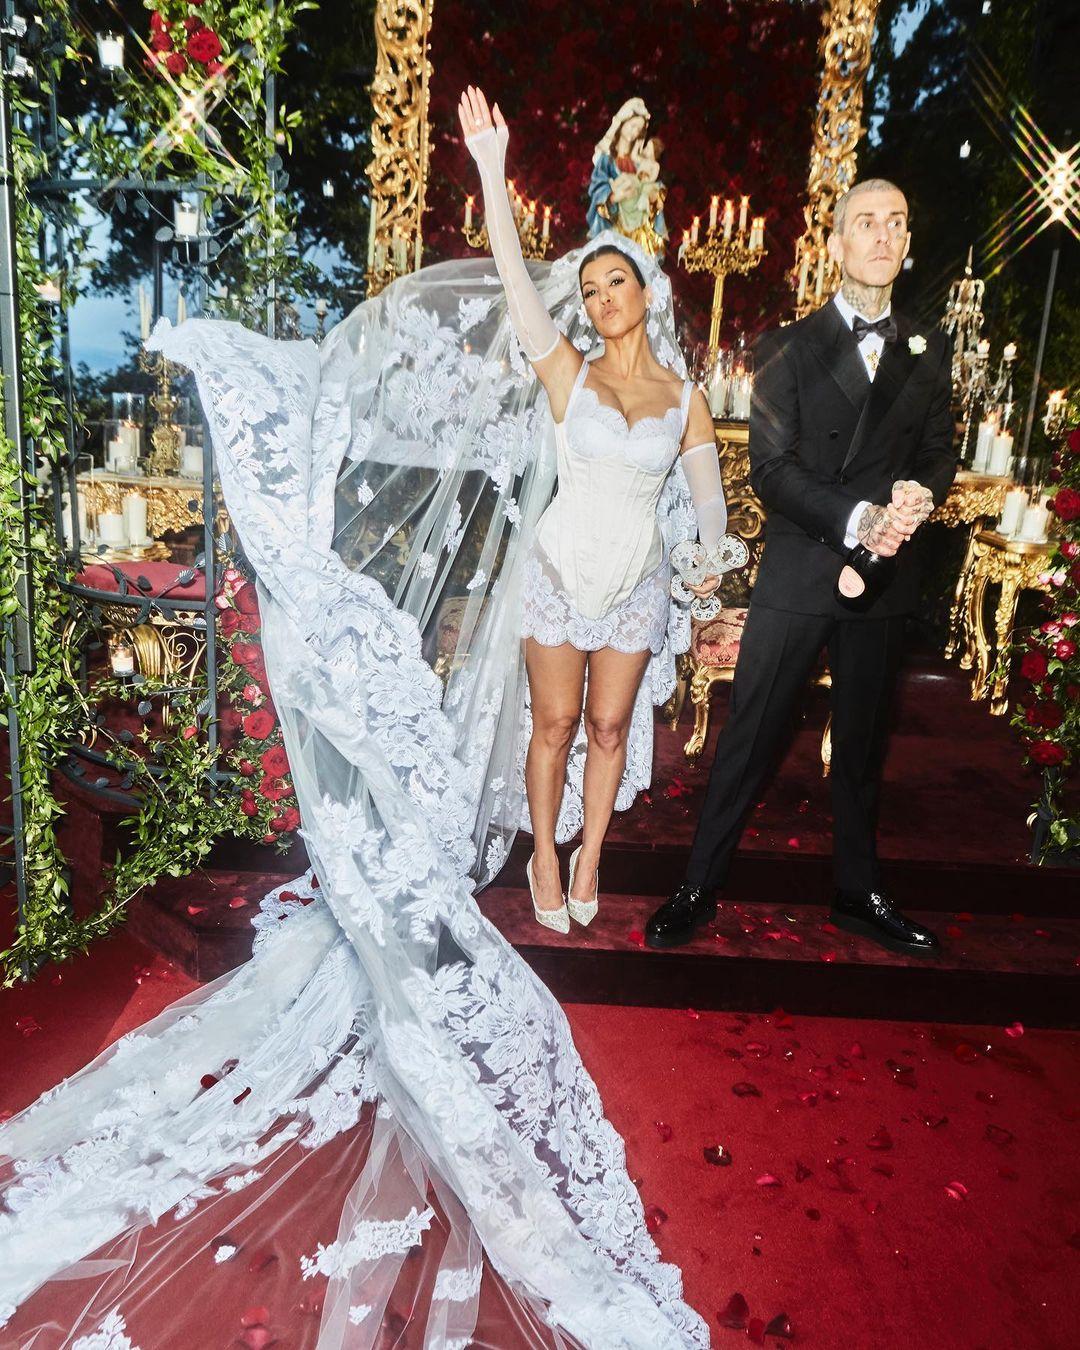 Kourtney Kardashian's wedding veil had a Travis Barker tat